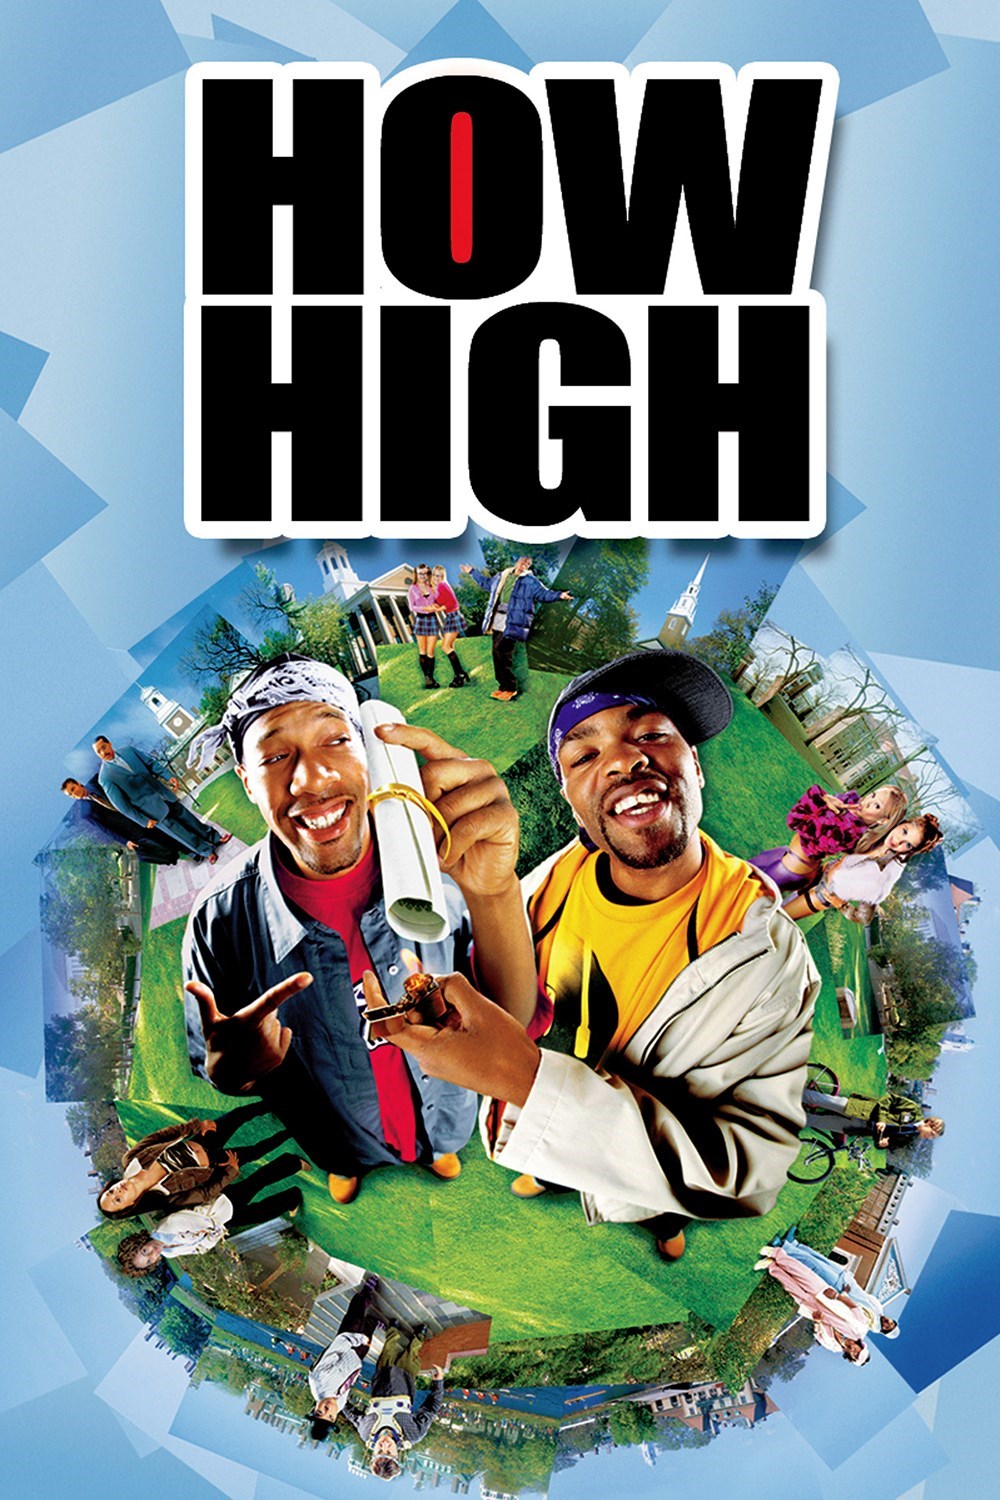 High & Low: The Movie 3 Final Mission (2017) ไฮ แอนด์ โลว์ เดอะมูฟวี่ 3 ไฟนอล มิชชั่น Method Man